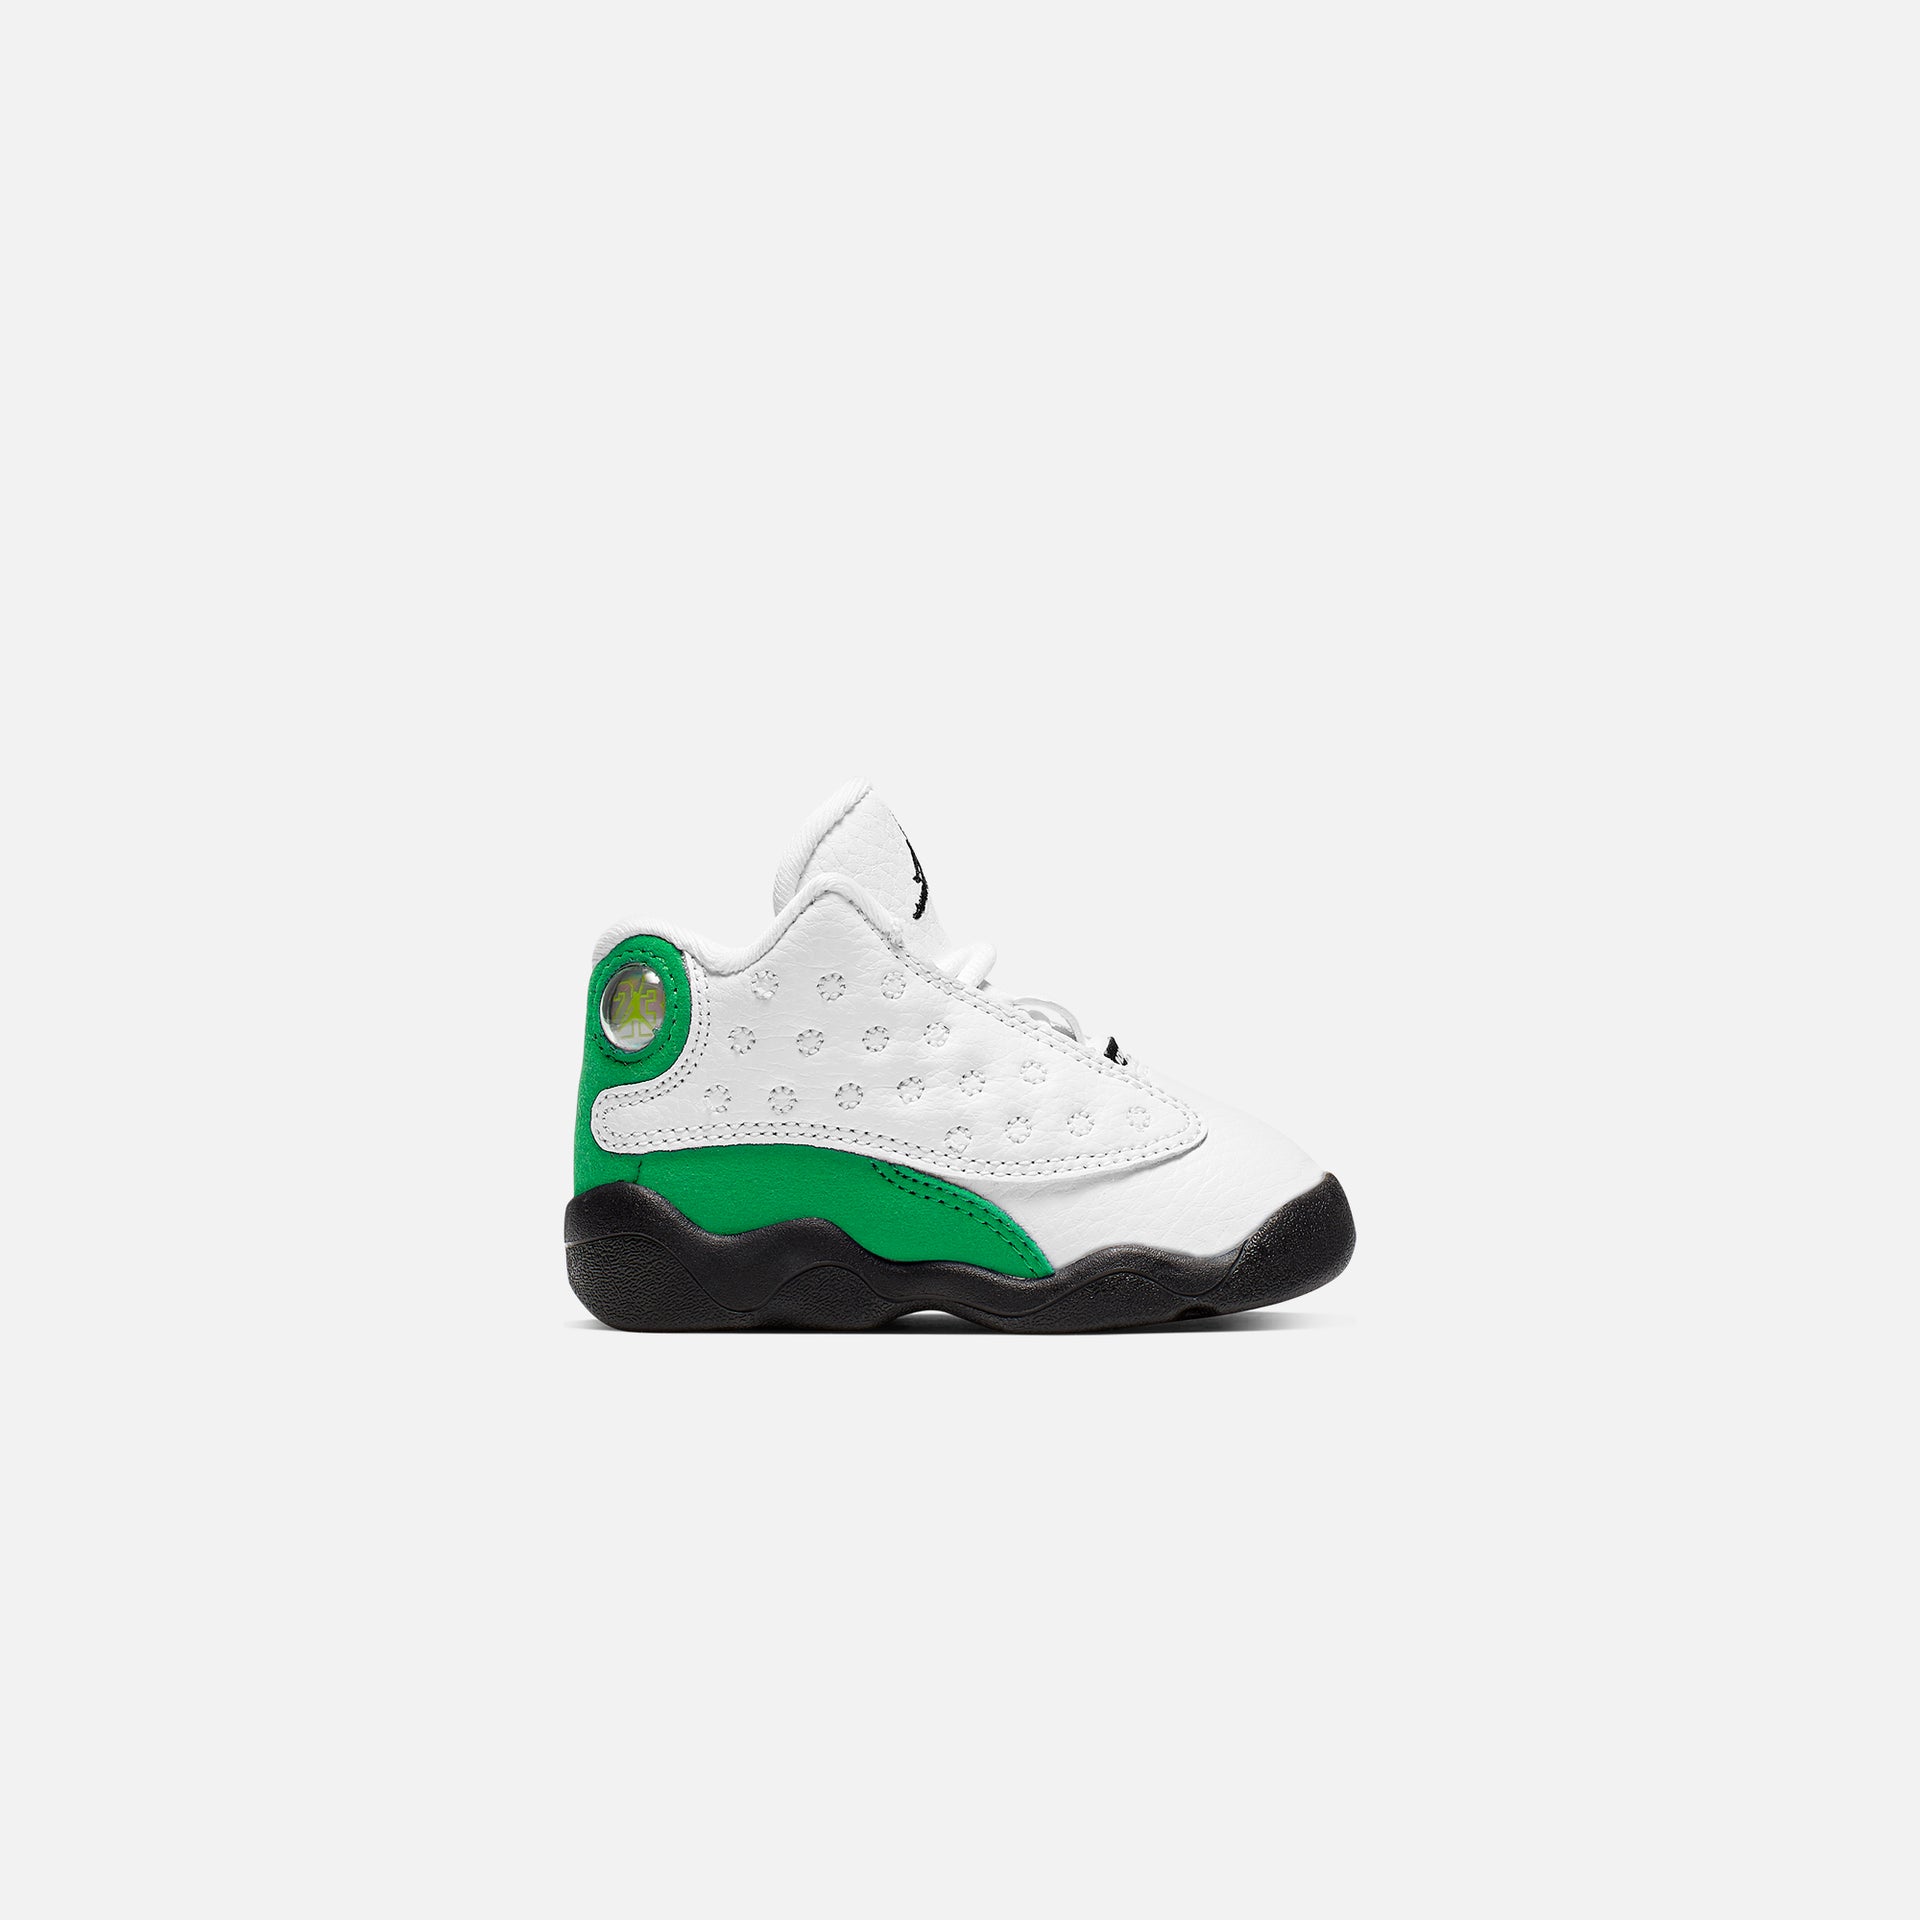 Nike Toddler Air Jordan 13 Retro - White / Lucky Green / Black